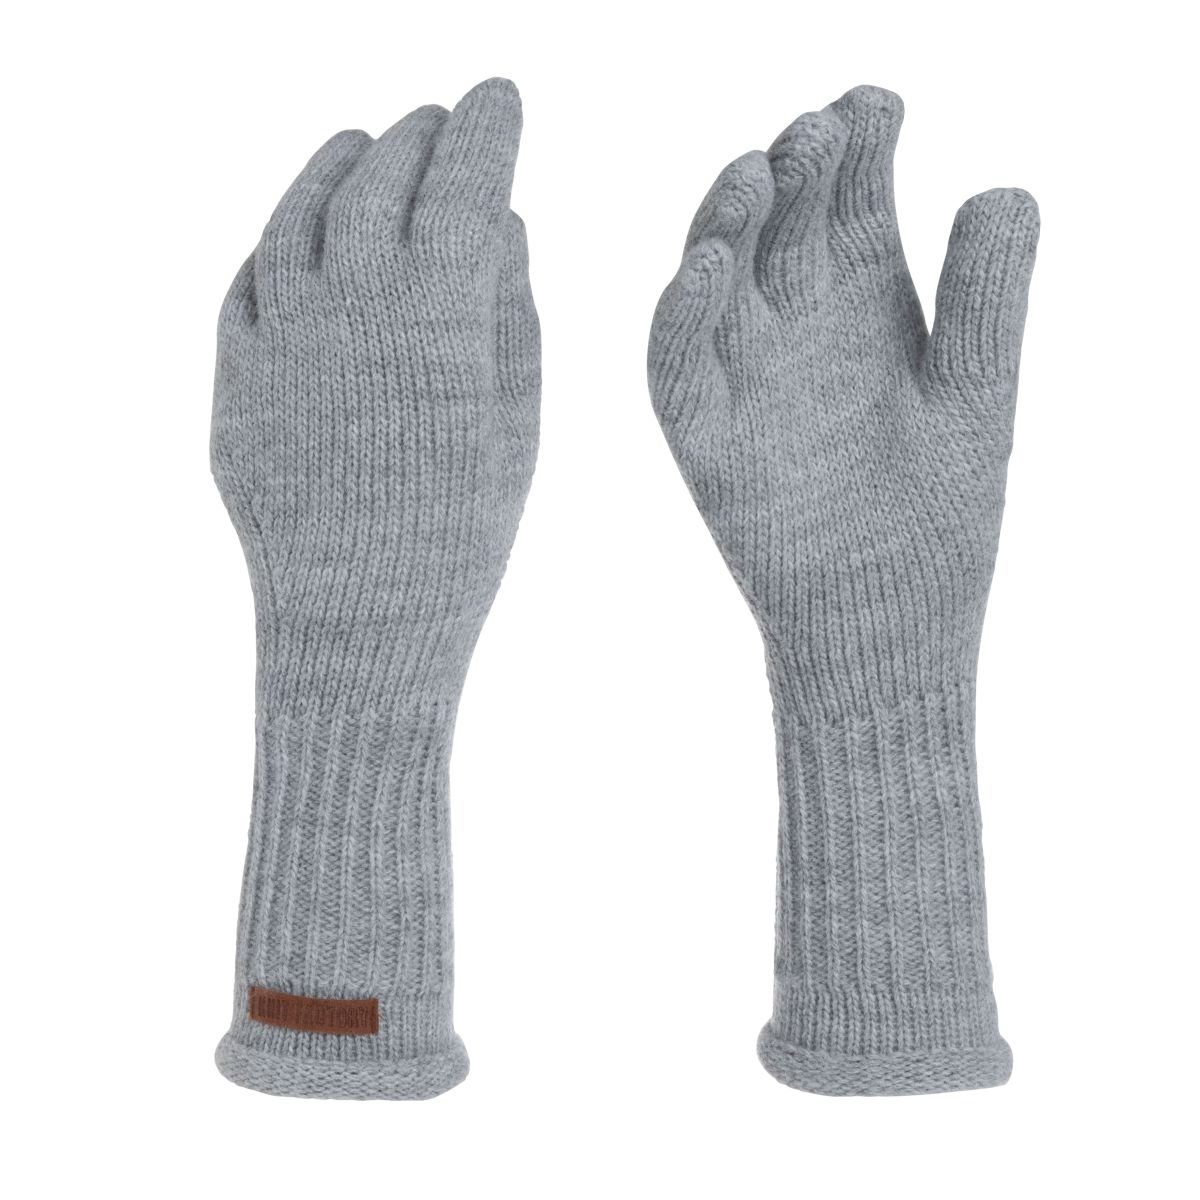 Knit Factory ihne One Handschuhe Glatt Lana Handschuhe Strickhandschuhe Finger Grau Handstulpen Handschuhe Size